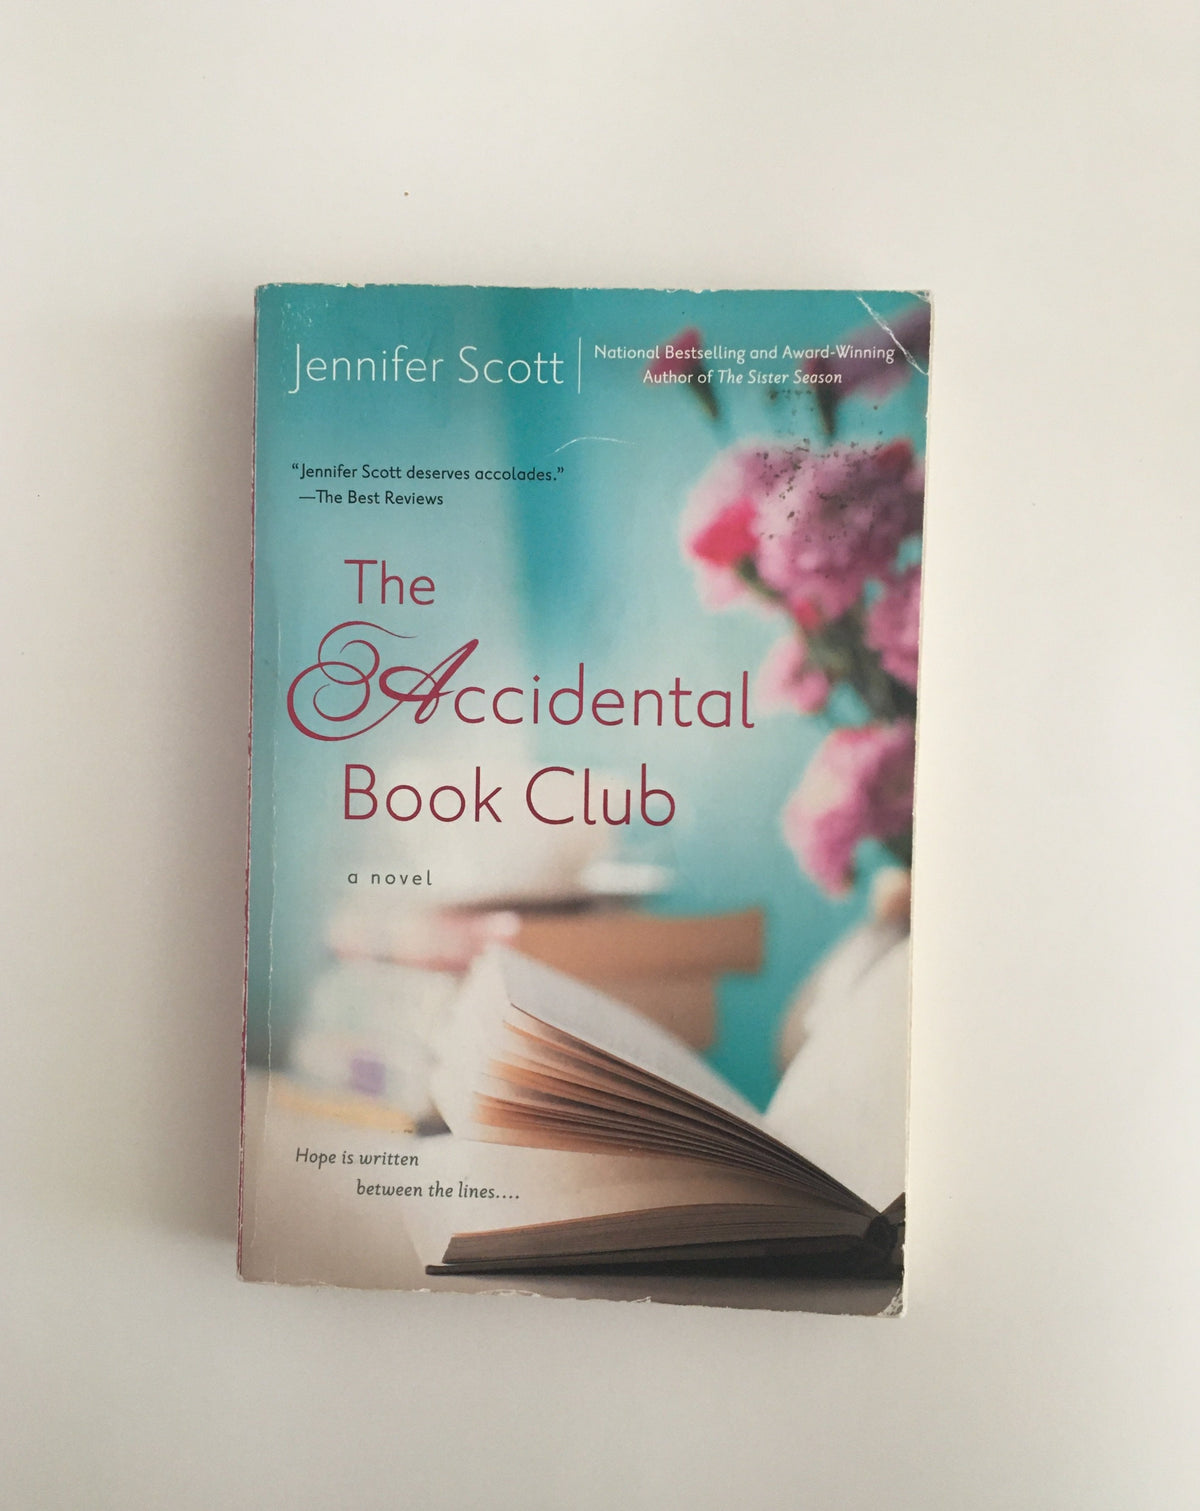 The Accidental Book Club by Jennifer Scott